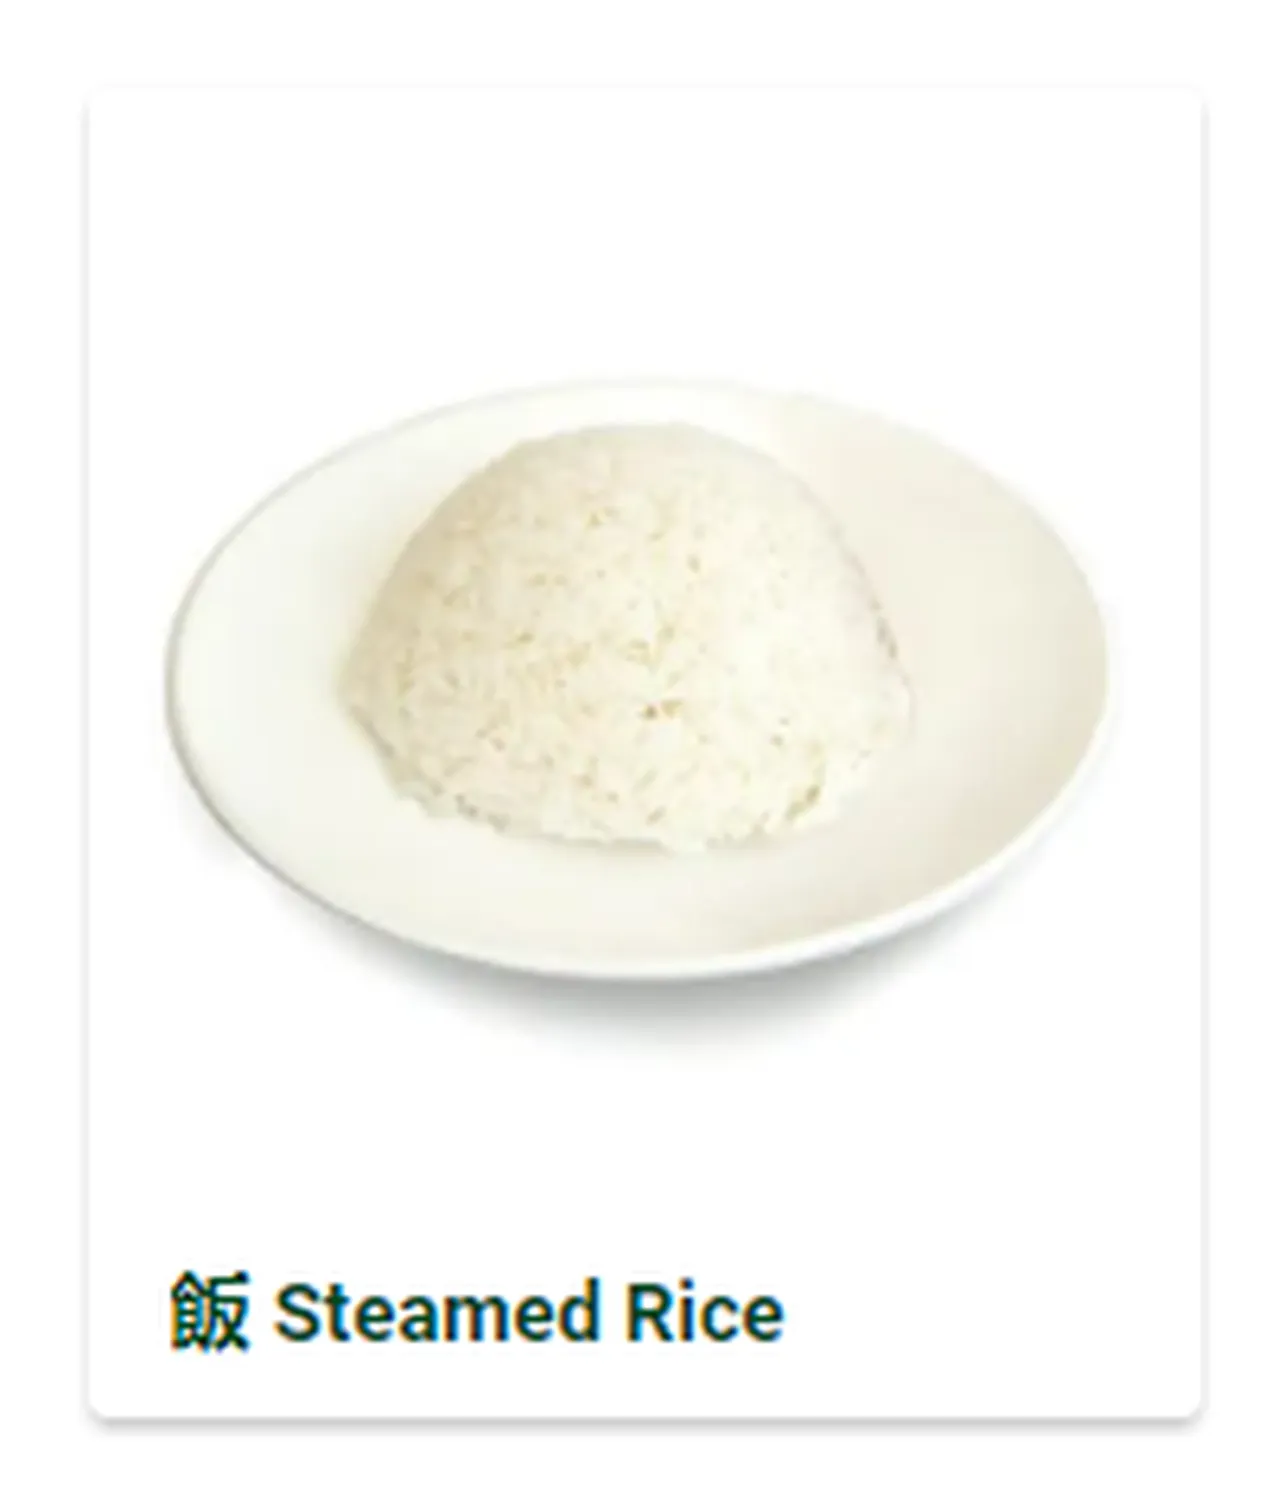 tsui wah menu singapore 飯 Steamed Rice 1